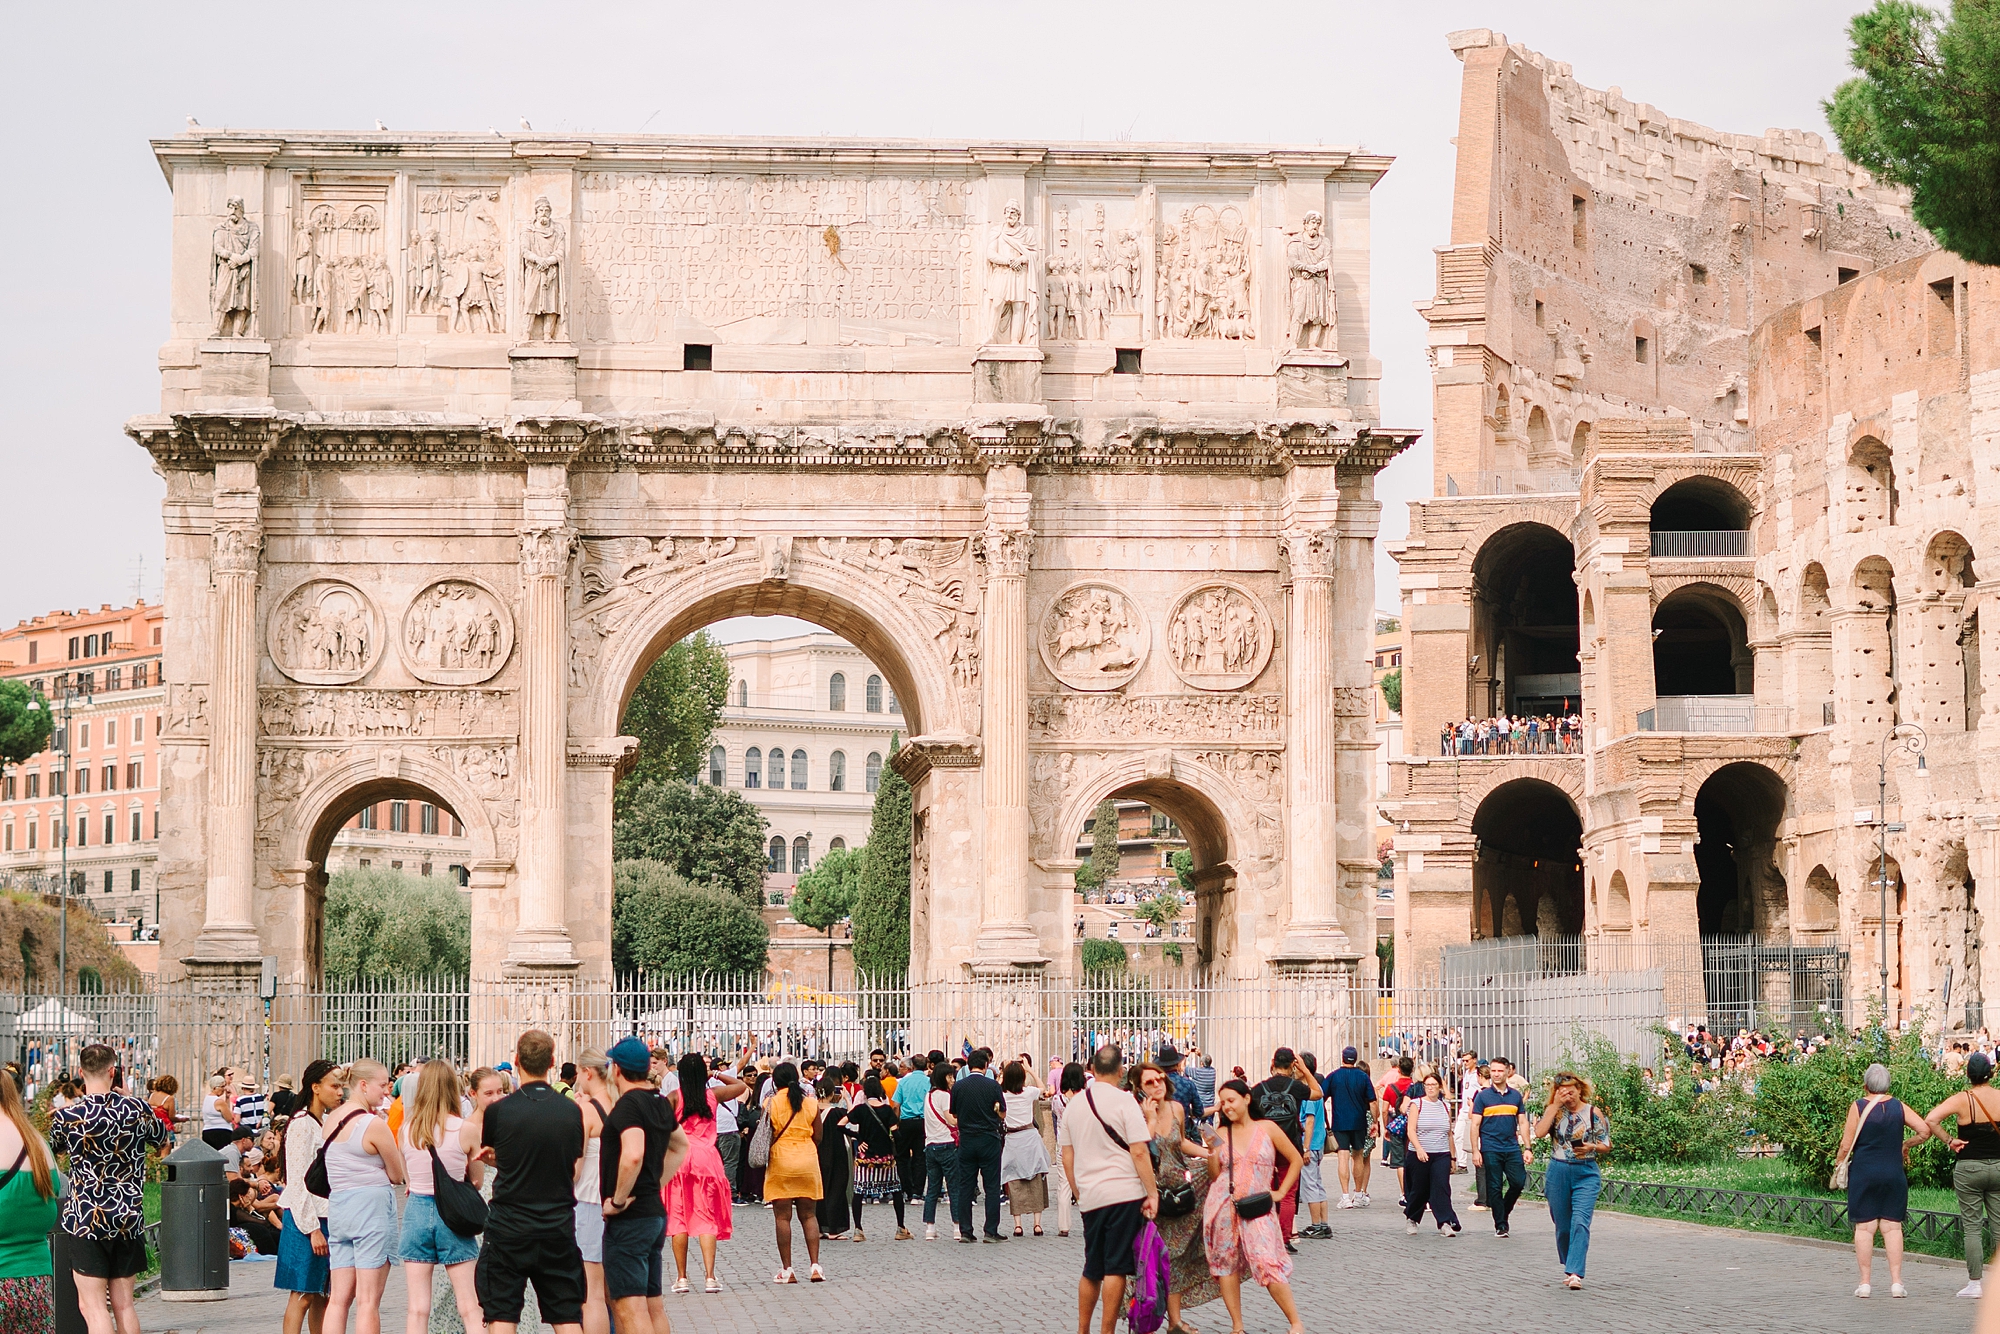 tourists mingle around the coliseum in Rome